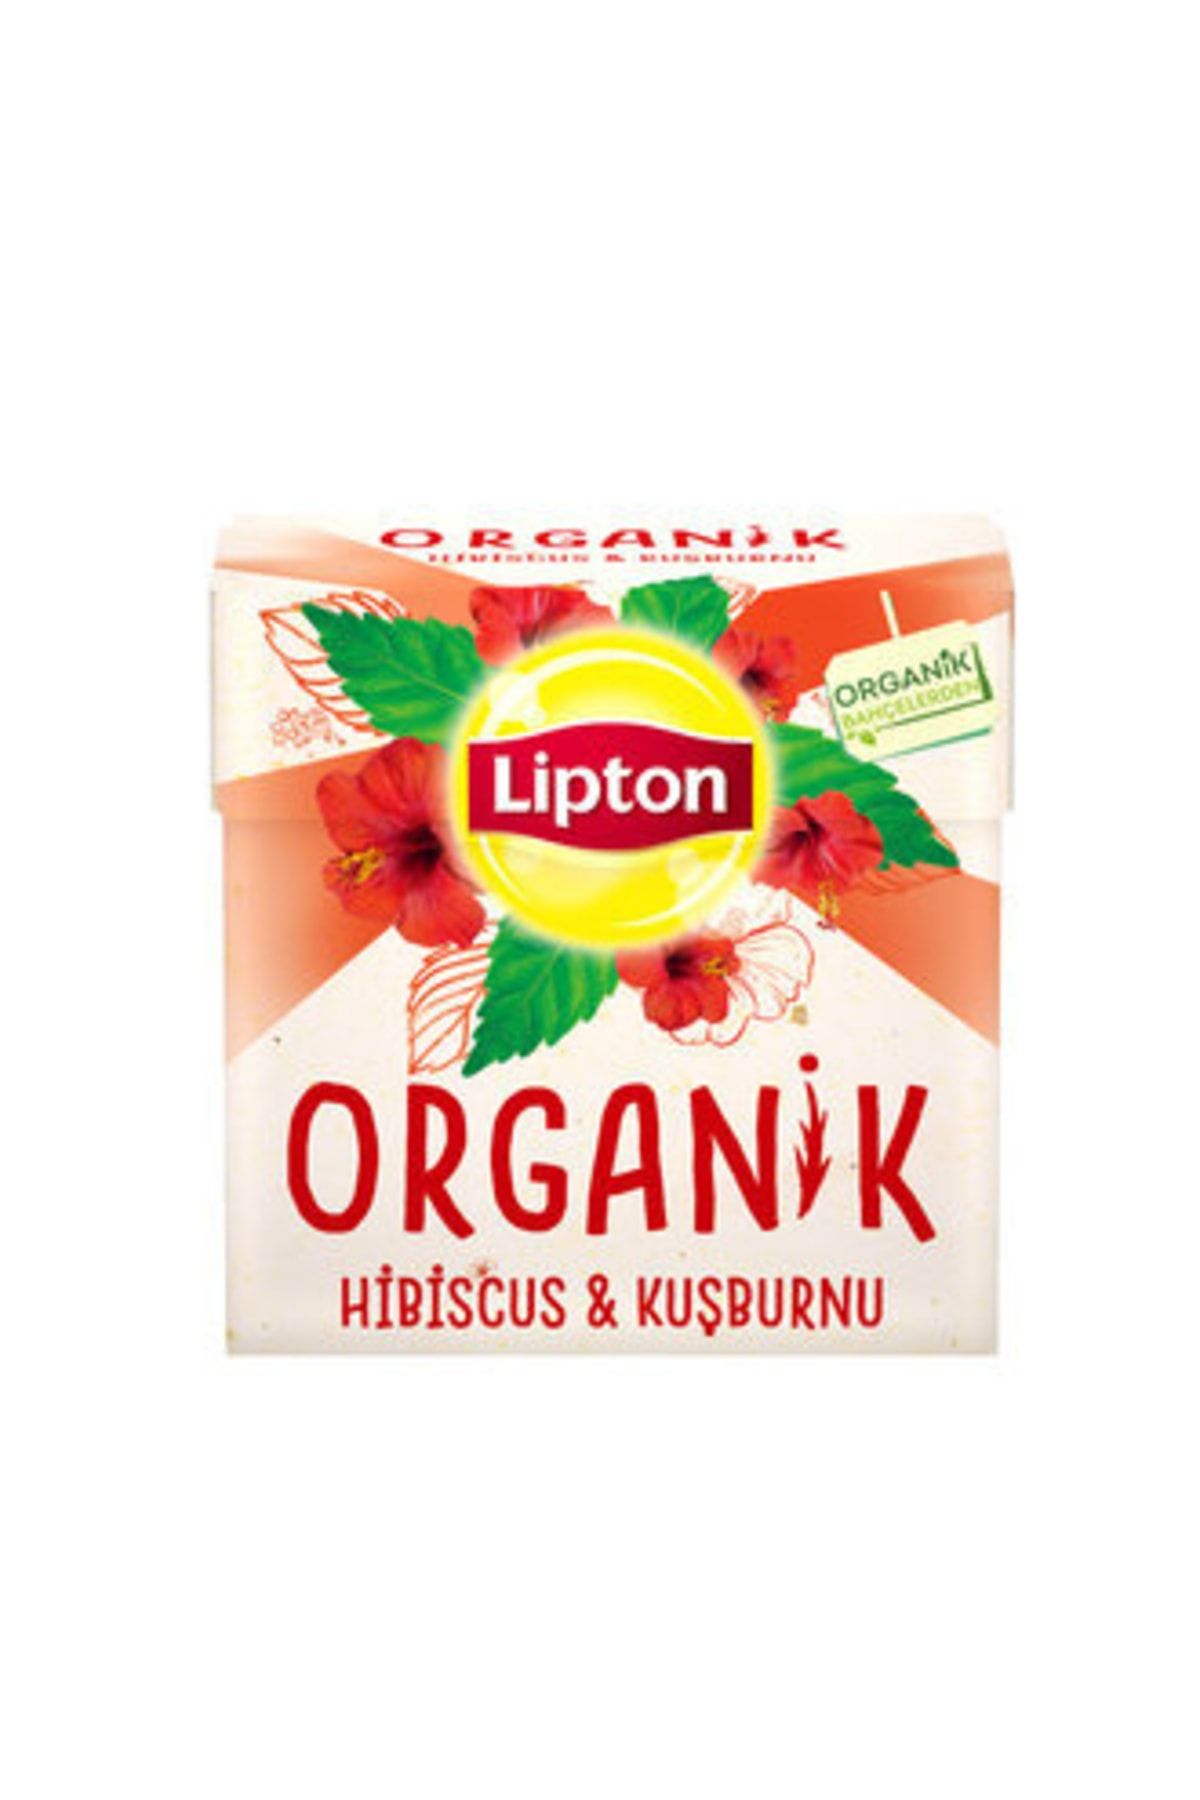 Lipton Organik Hibiscus Kuşburnu Çayı 20'li 40 g * 5 Adet